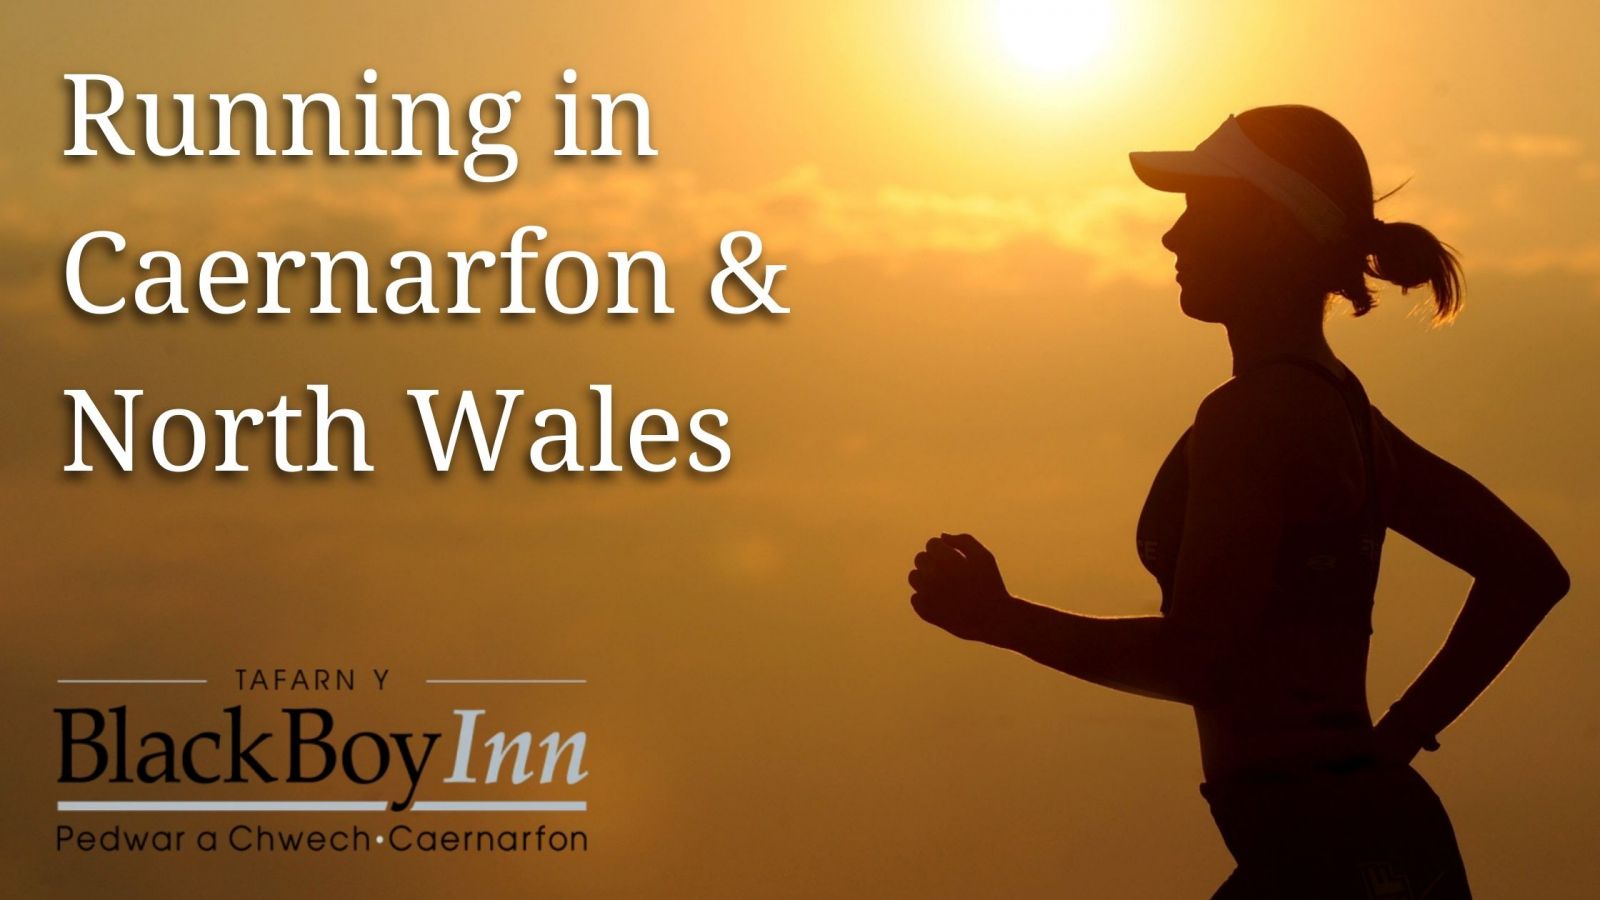 BBI - Running in Caernarfon & North Wales